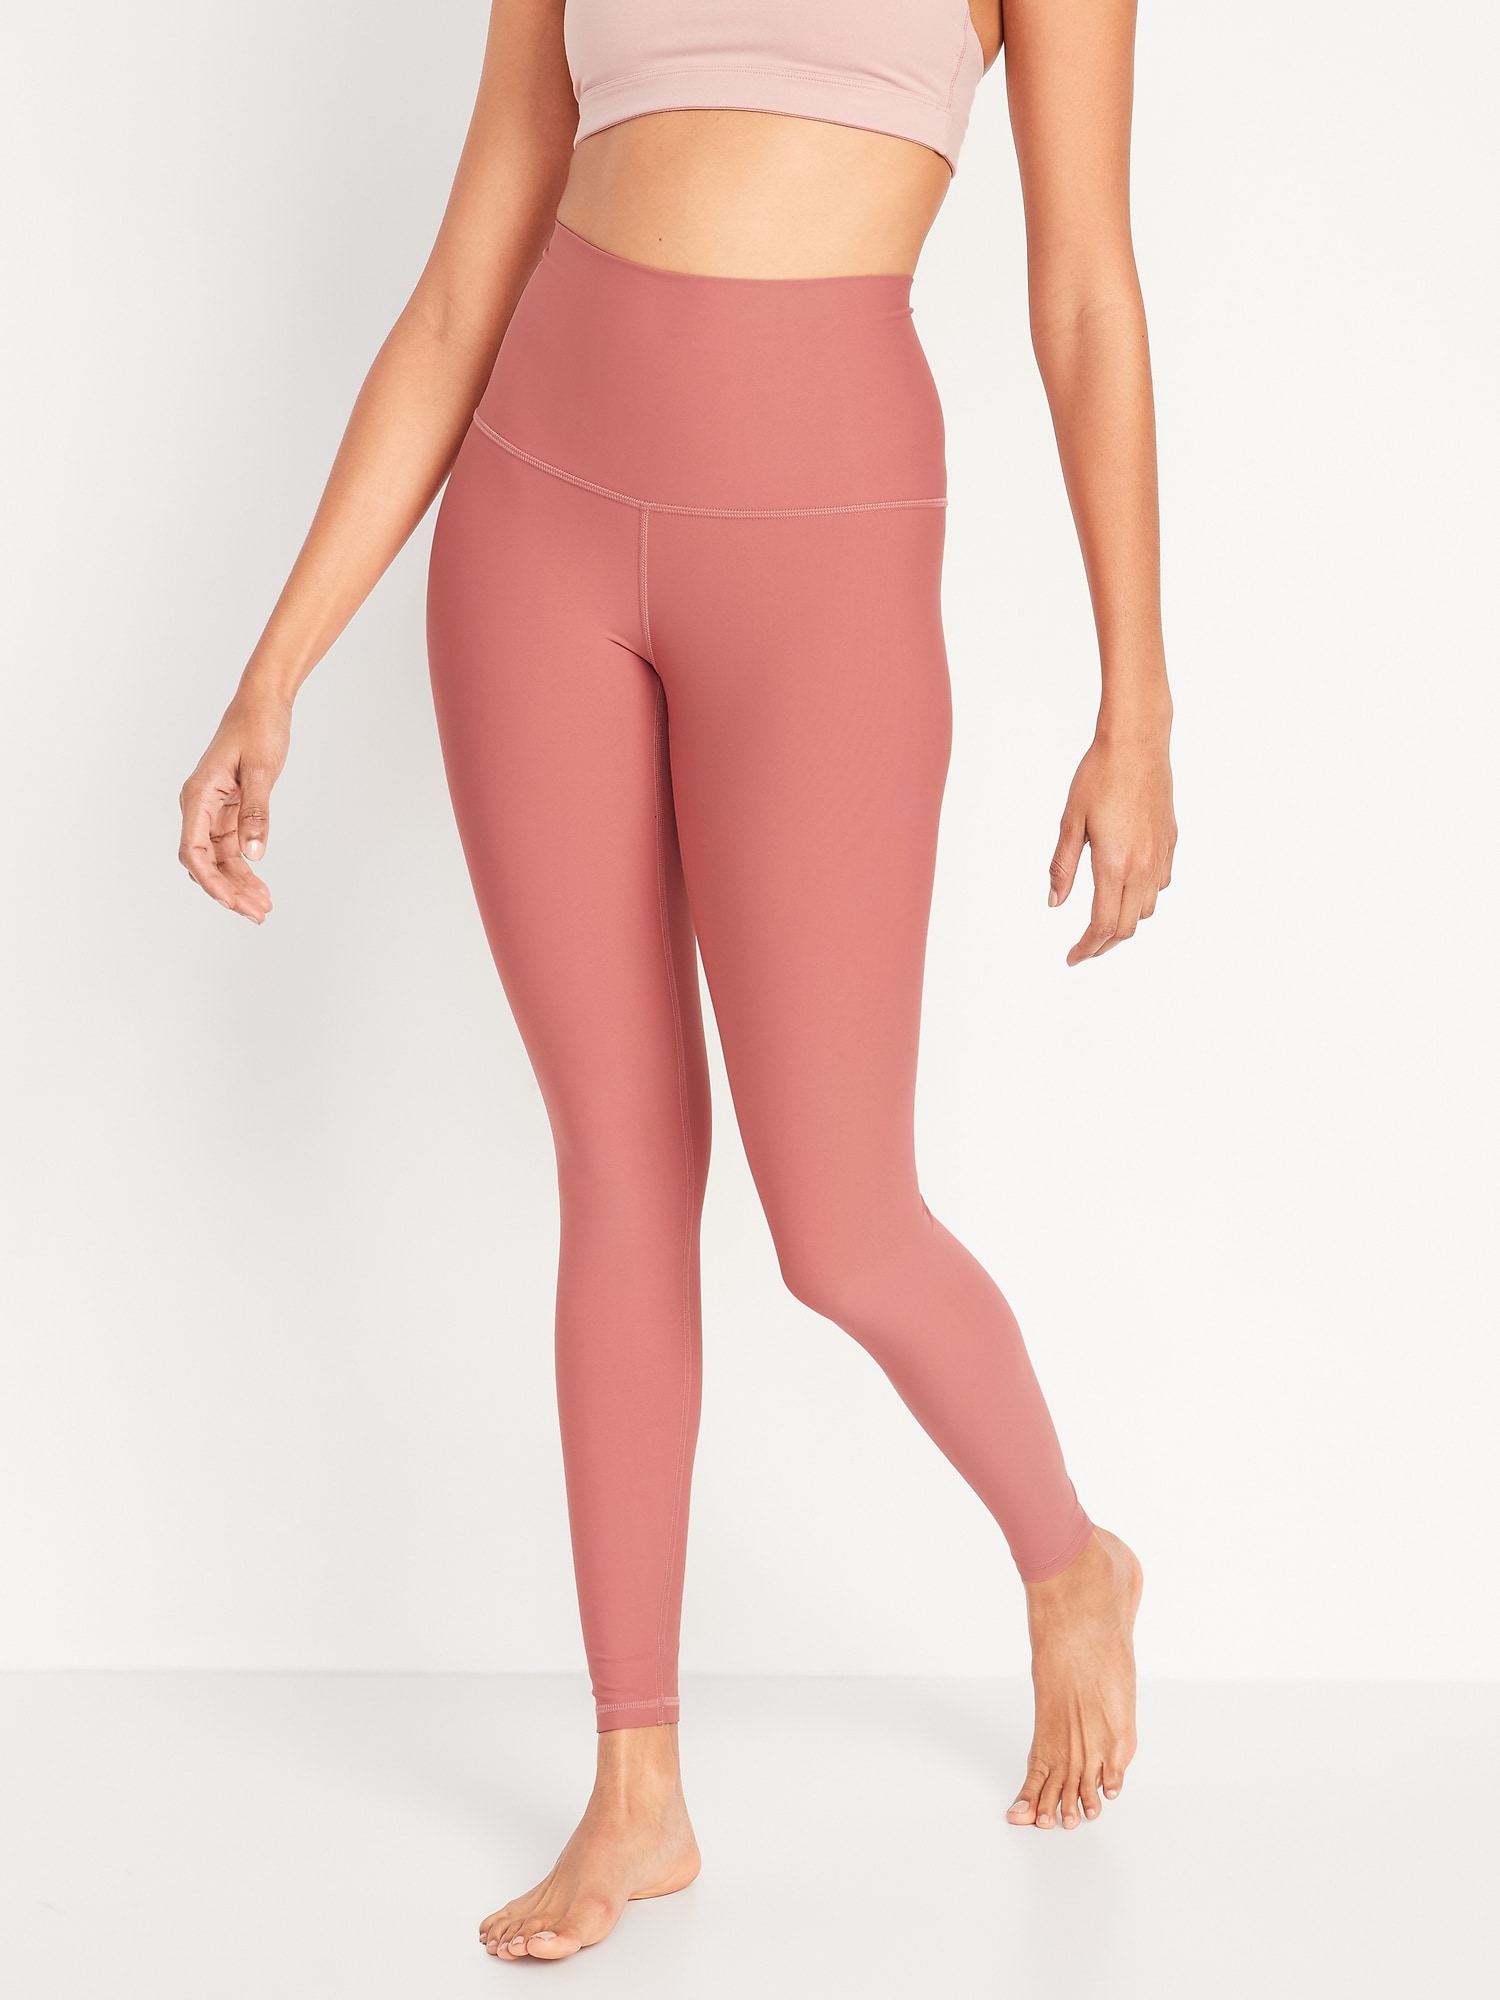 Plus Size Yoga Pants for Women